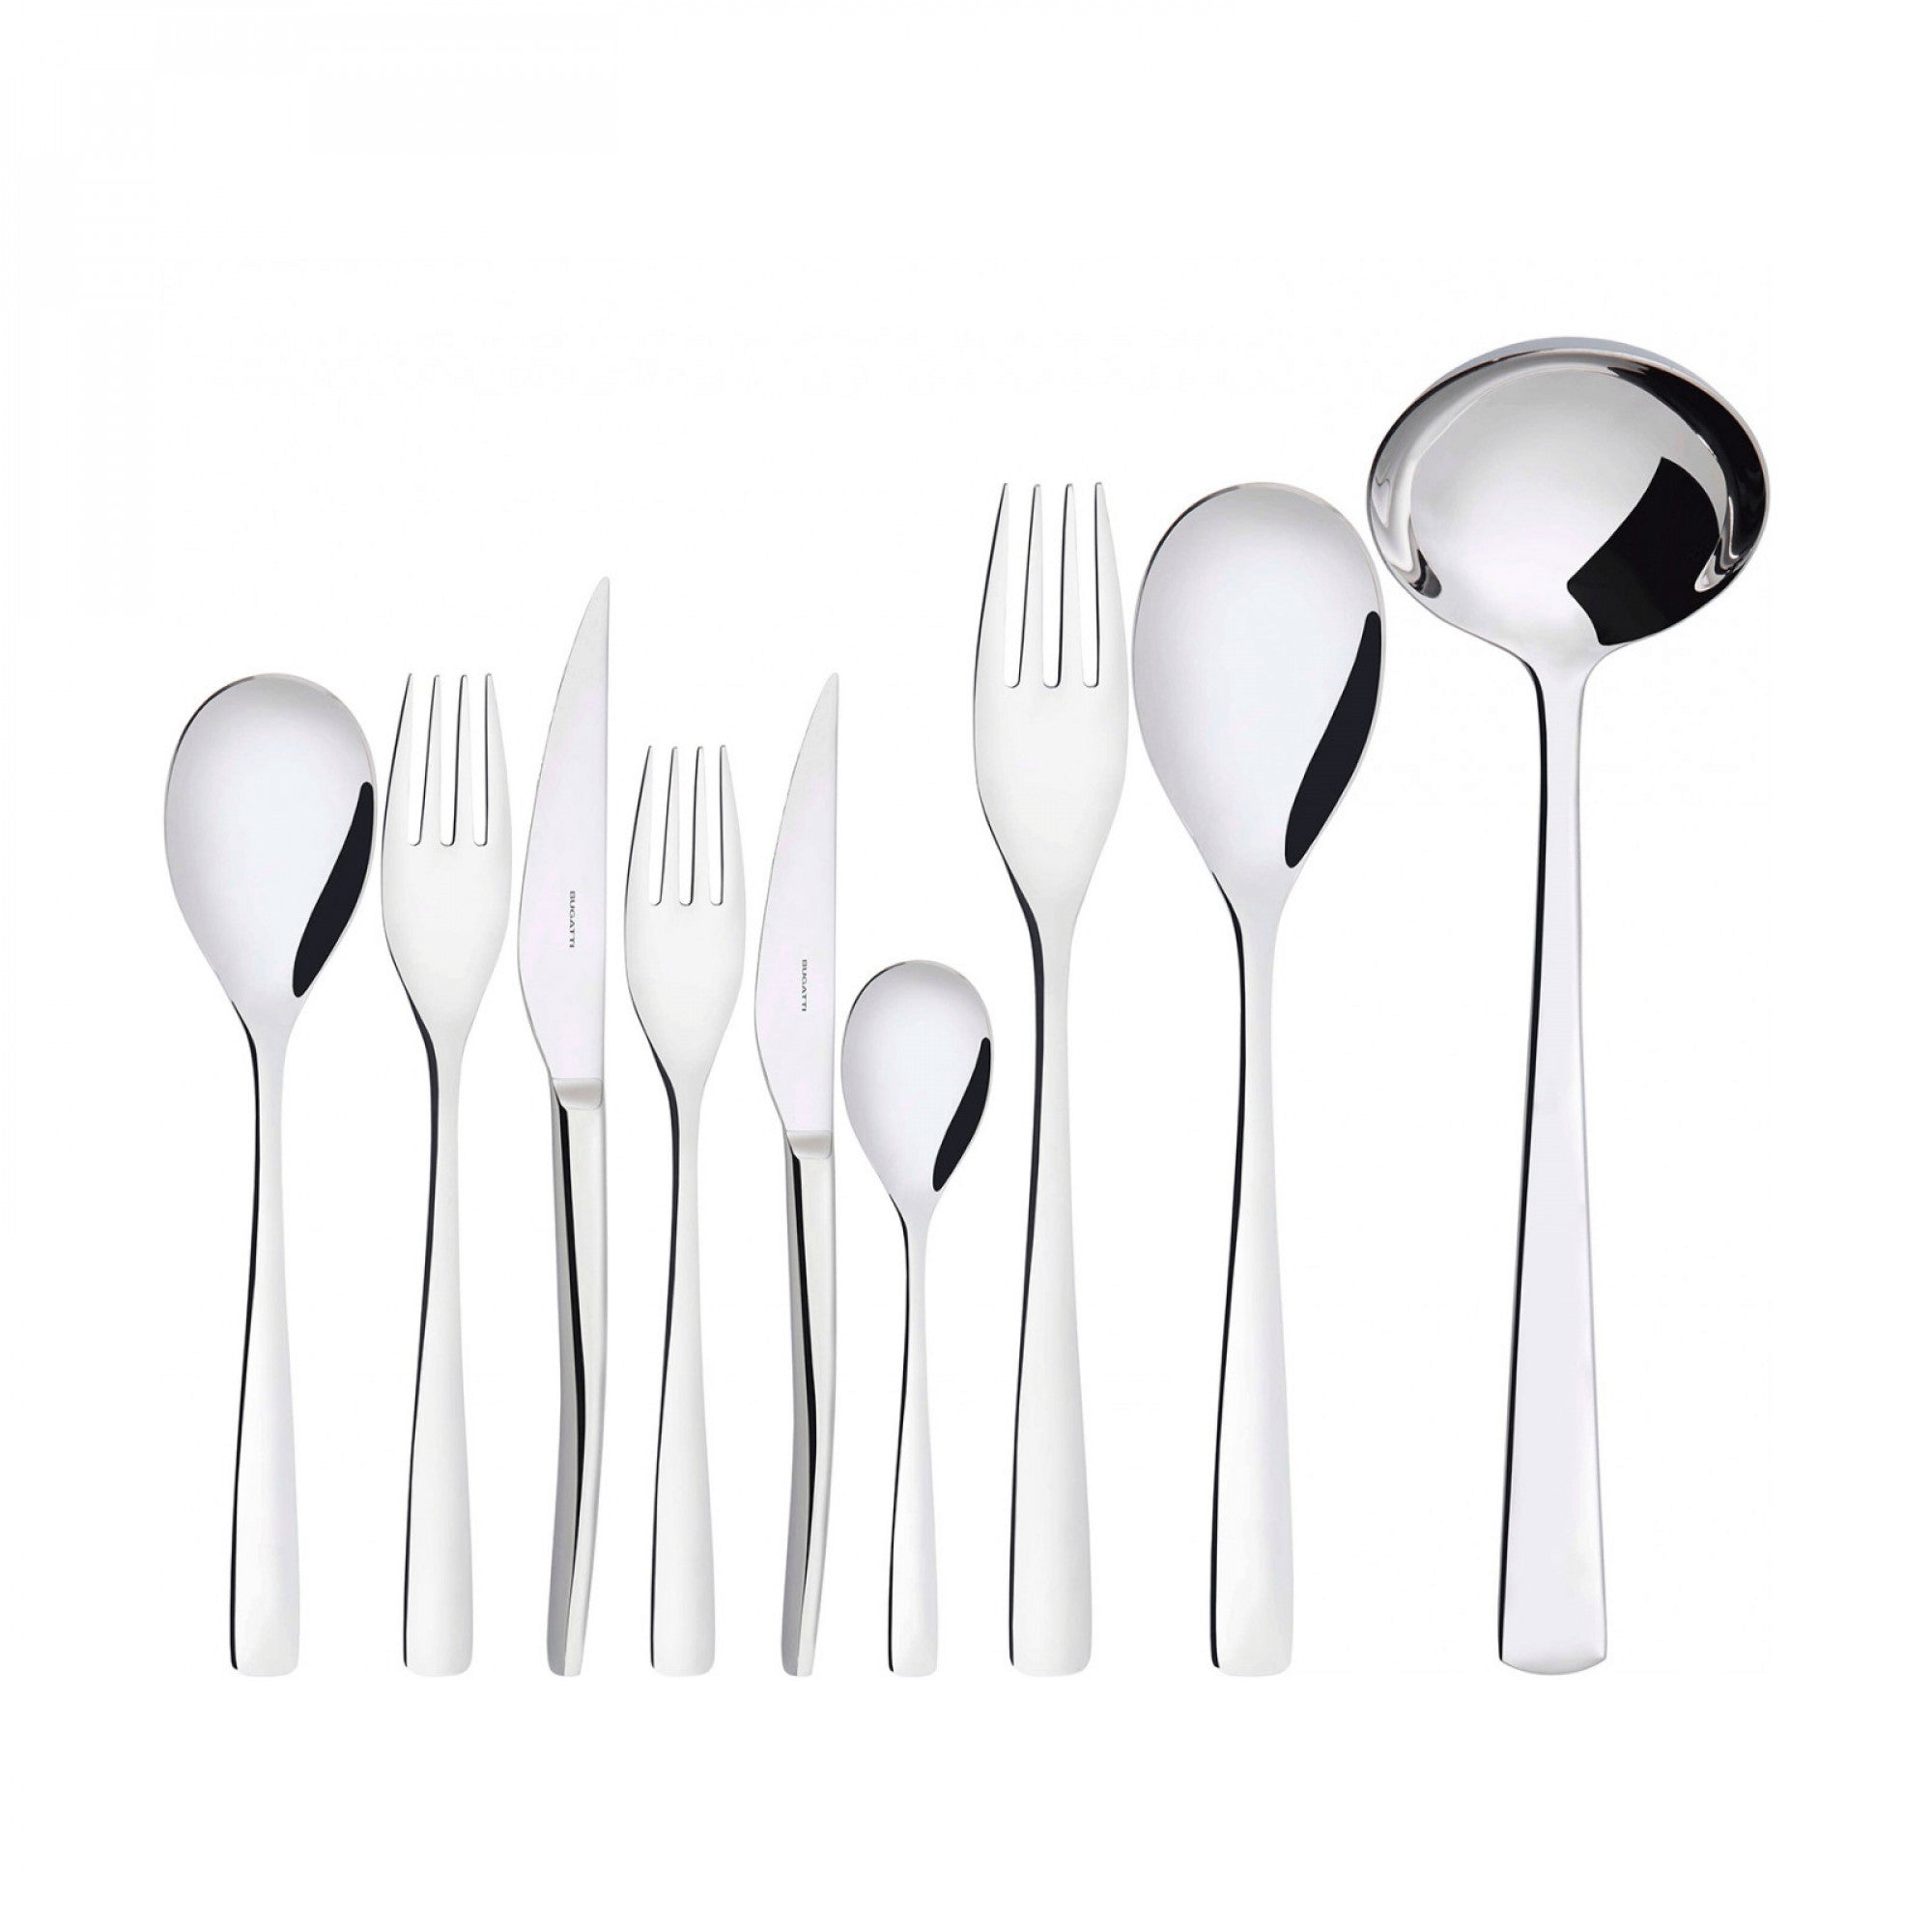 BUGATTI, Amalfi, 75-piece cutlery set in 18/10 stainless steel